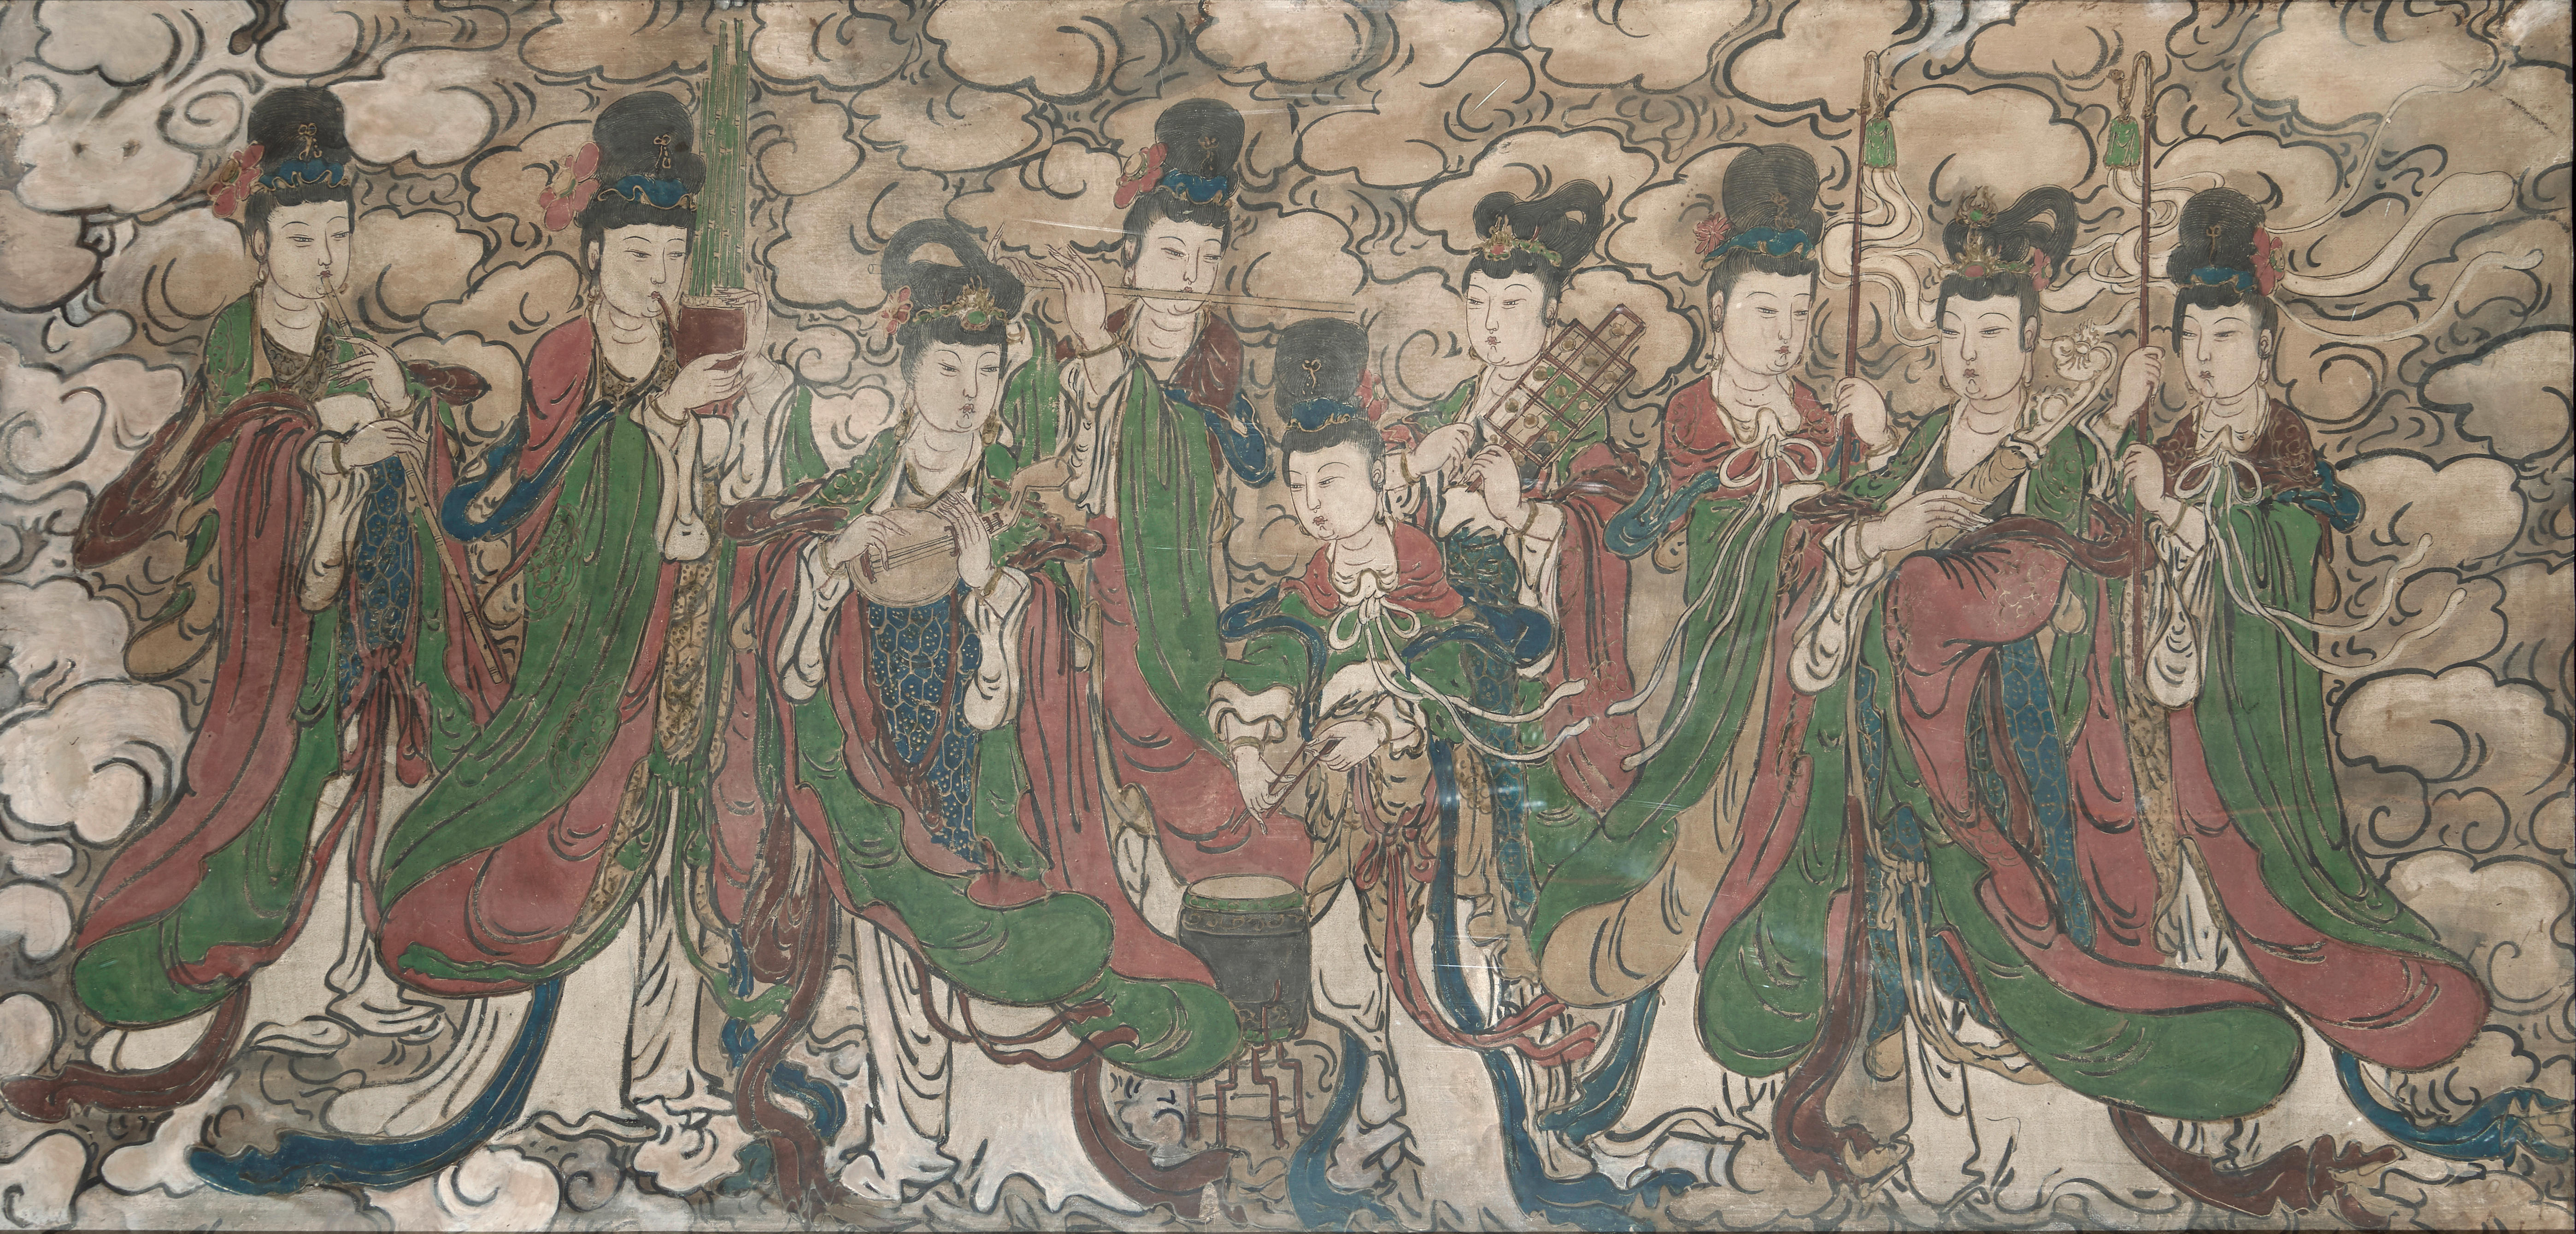 ming dynasty